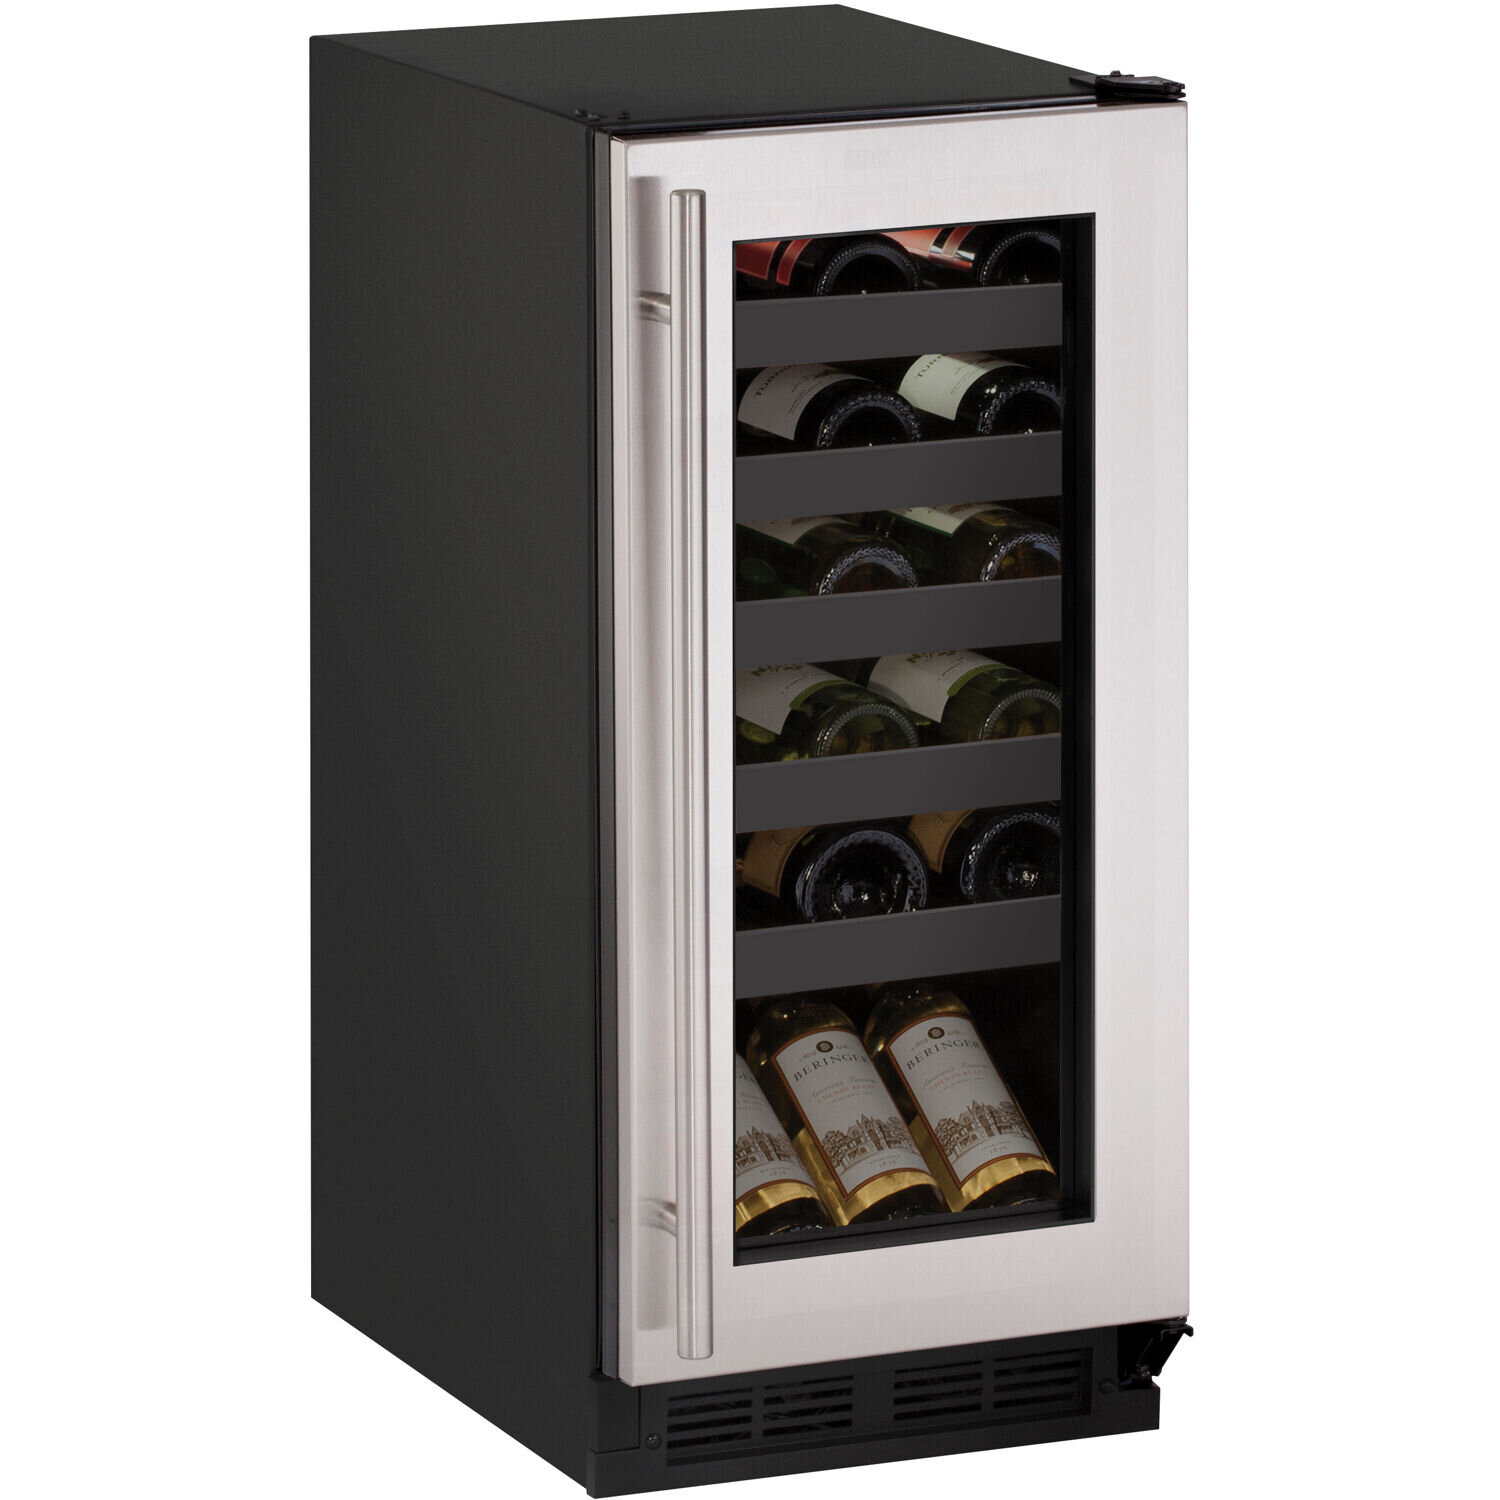 STAIGIS 17.3'' 24 Bottle Single Zone Freestanding Wine Refrigerator